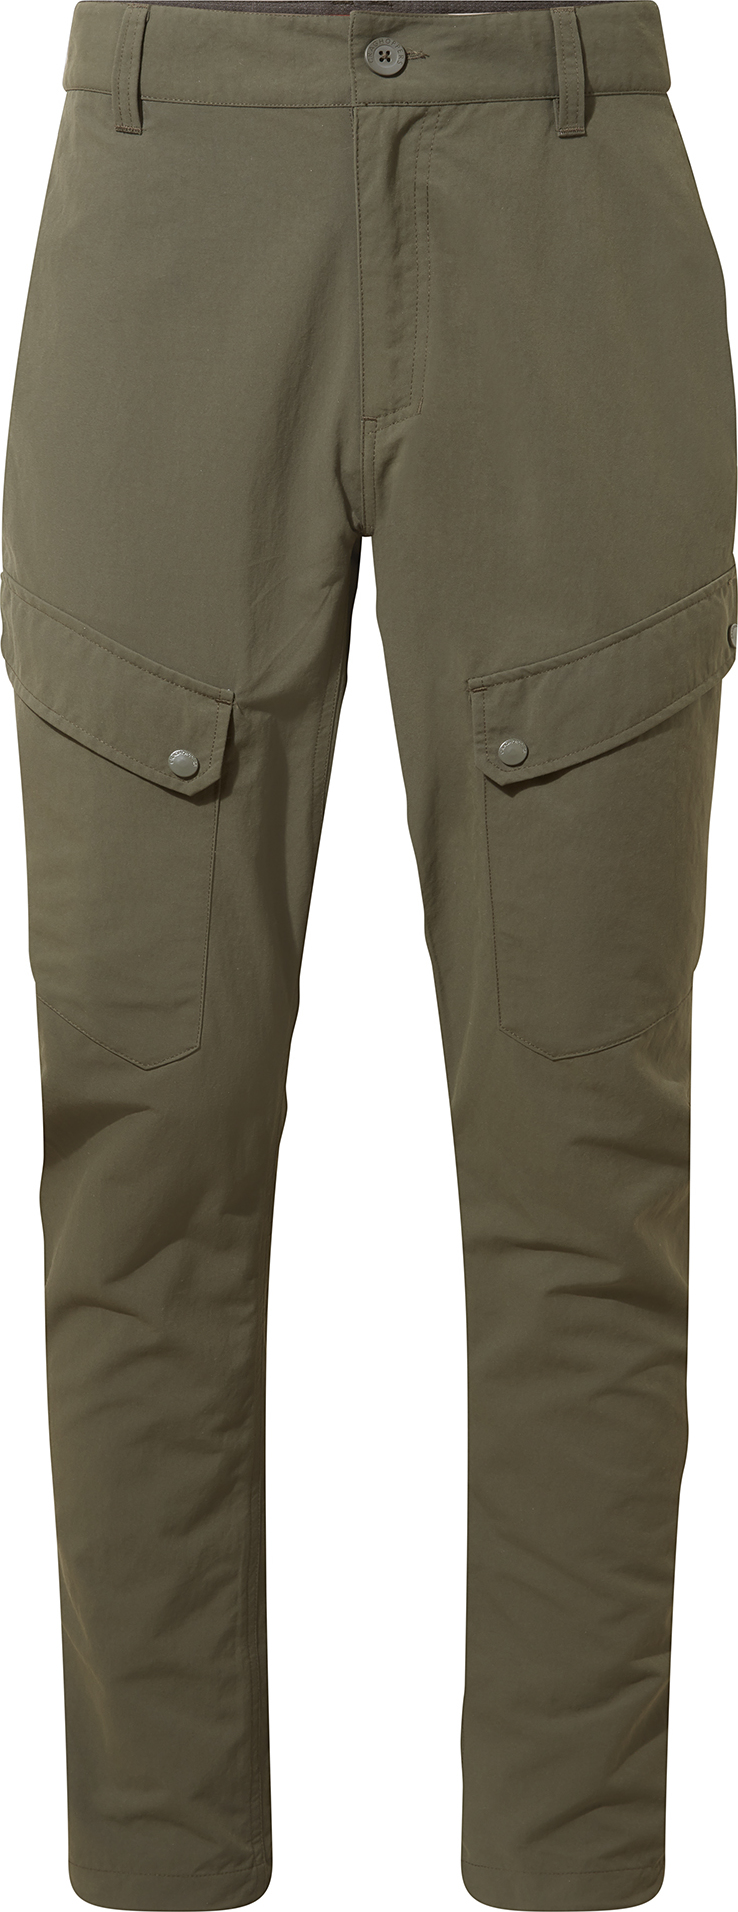 Buy LINGMIN Men's Outdoor Woodland Military Cargo Pants Camo Combat Pockets  Work Pants at Amazon.in